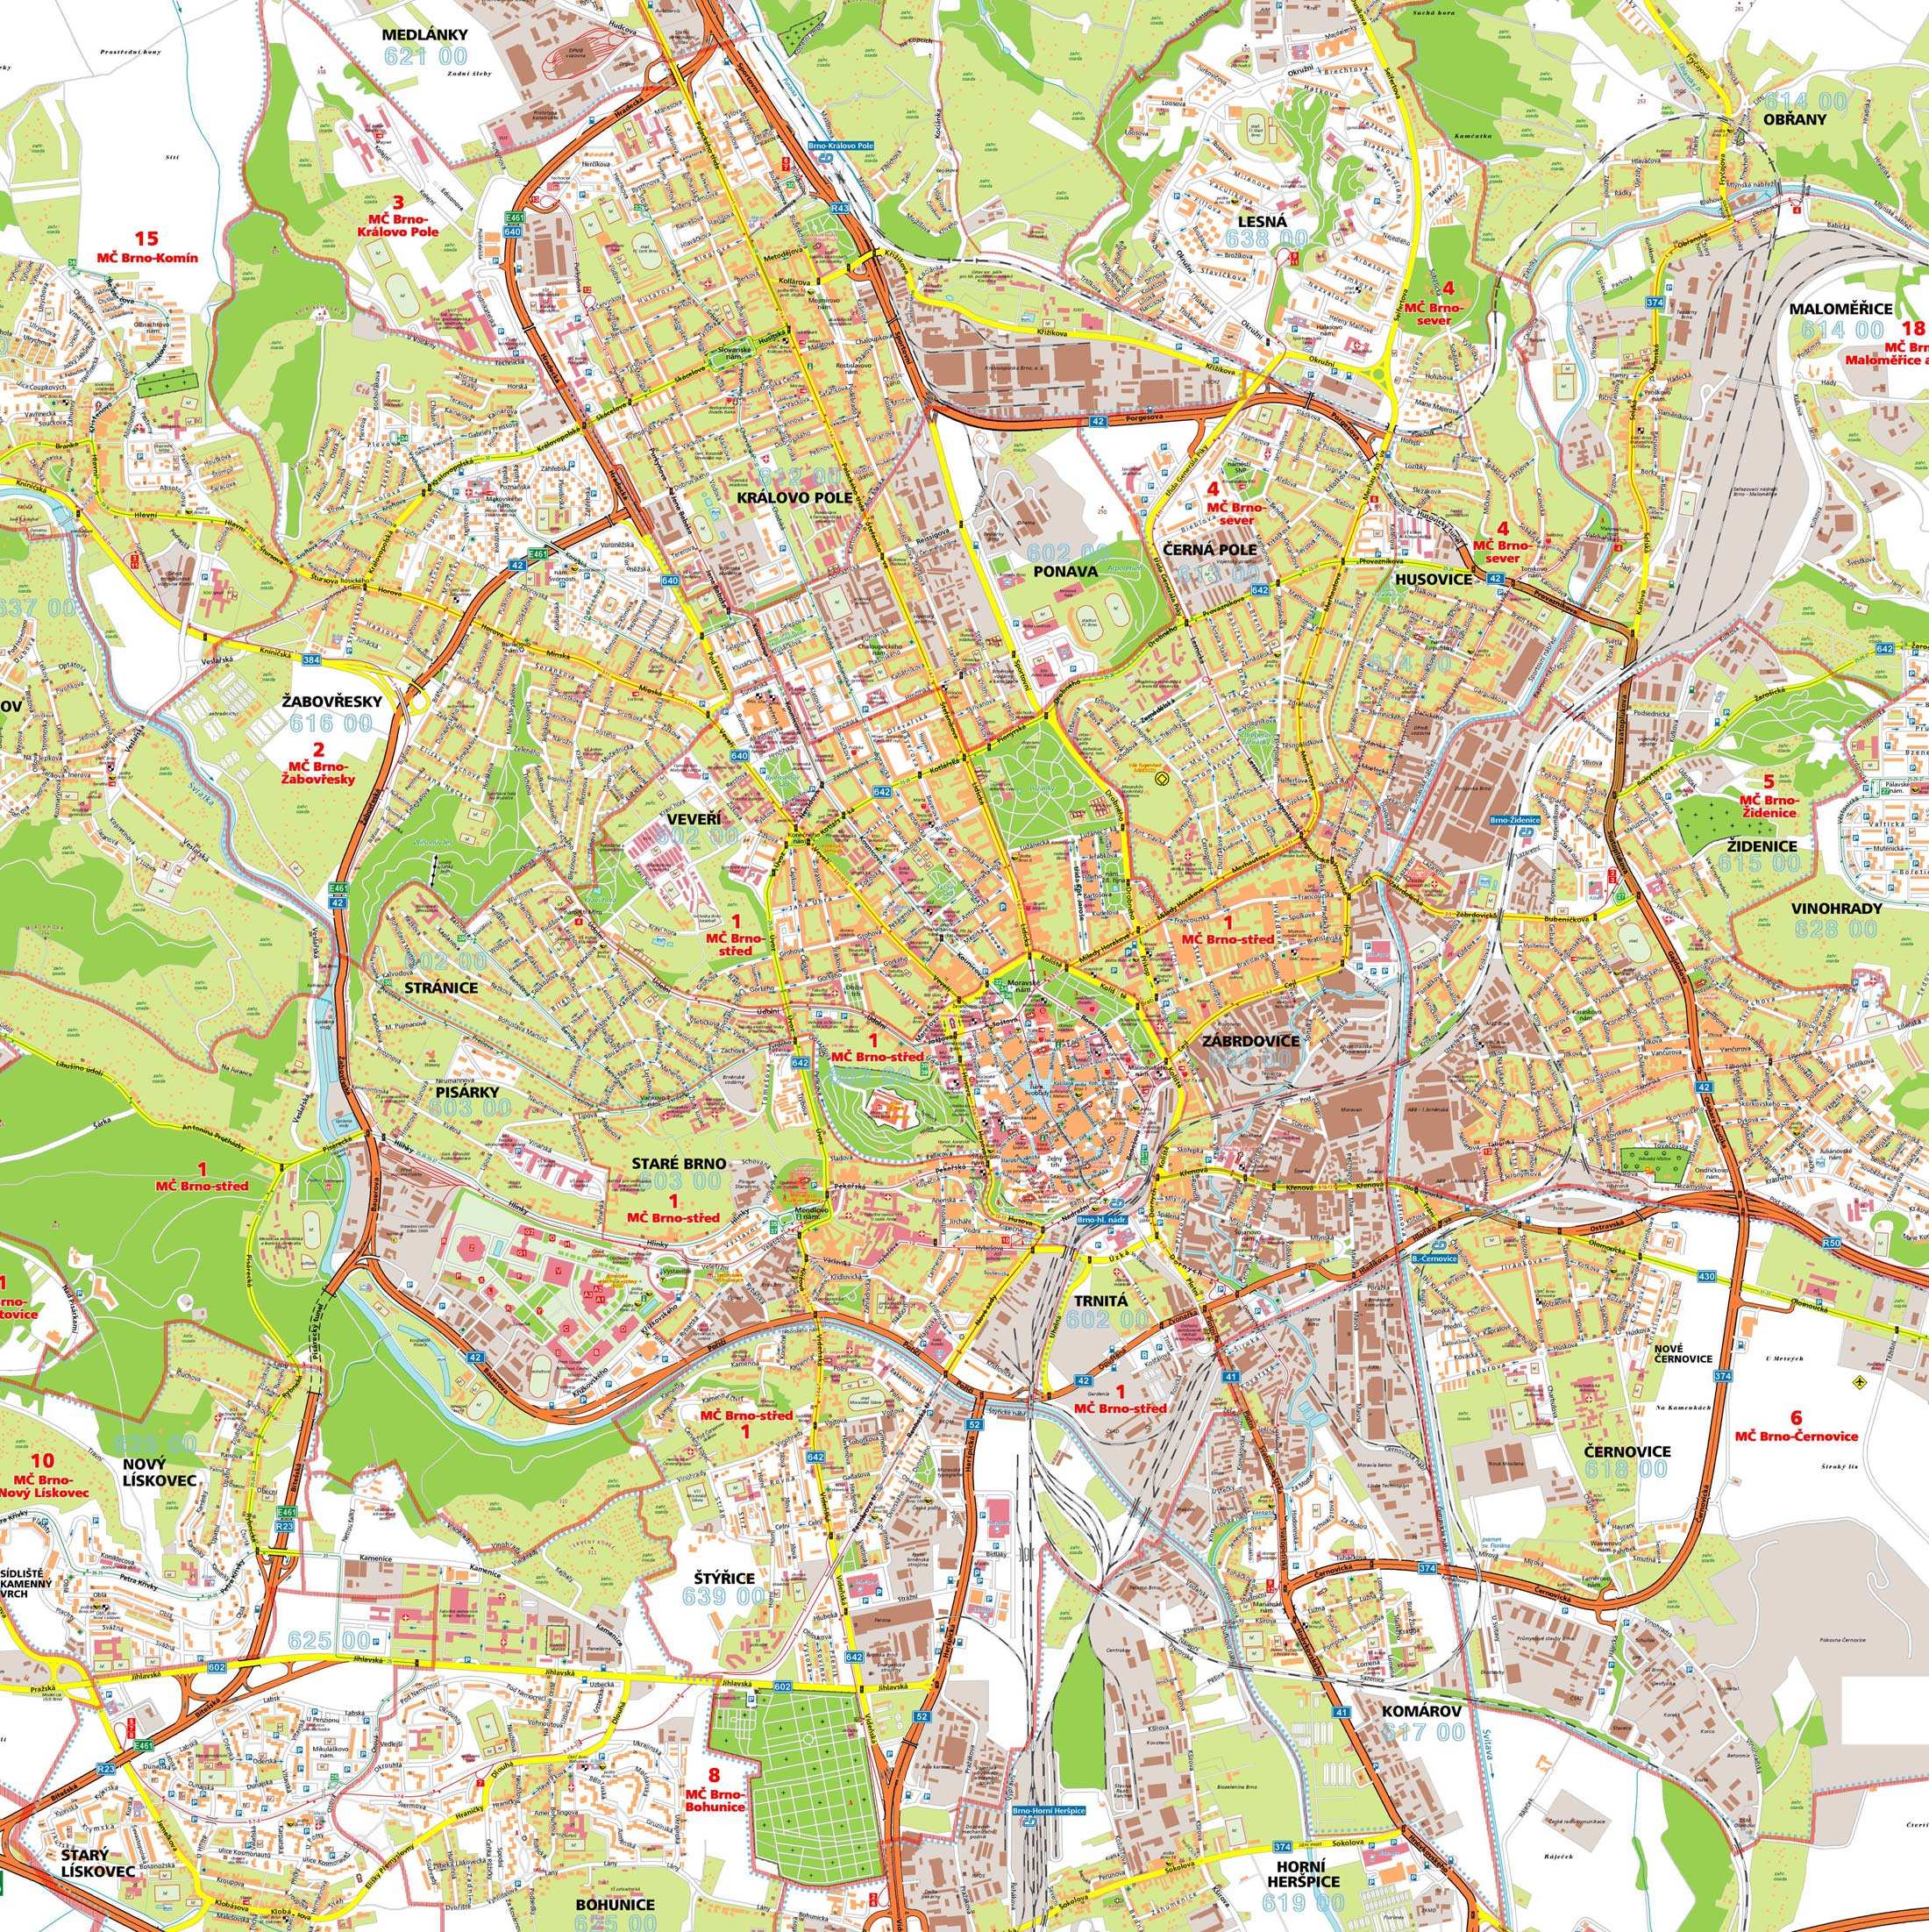 brno térkép Large Brno Maps for Free Download and Print | High Resolution and  brno térkép